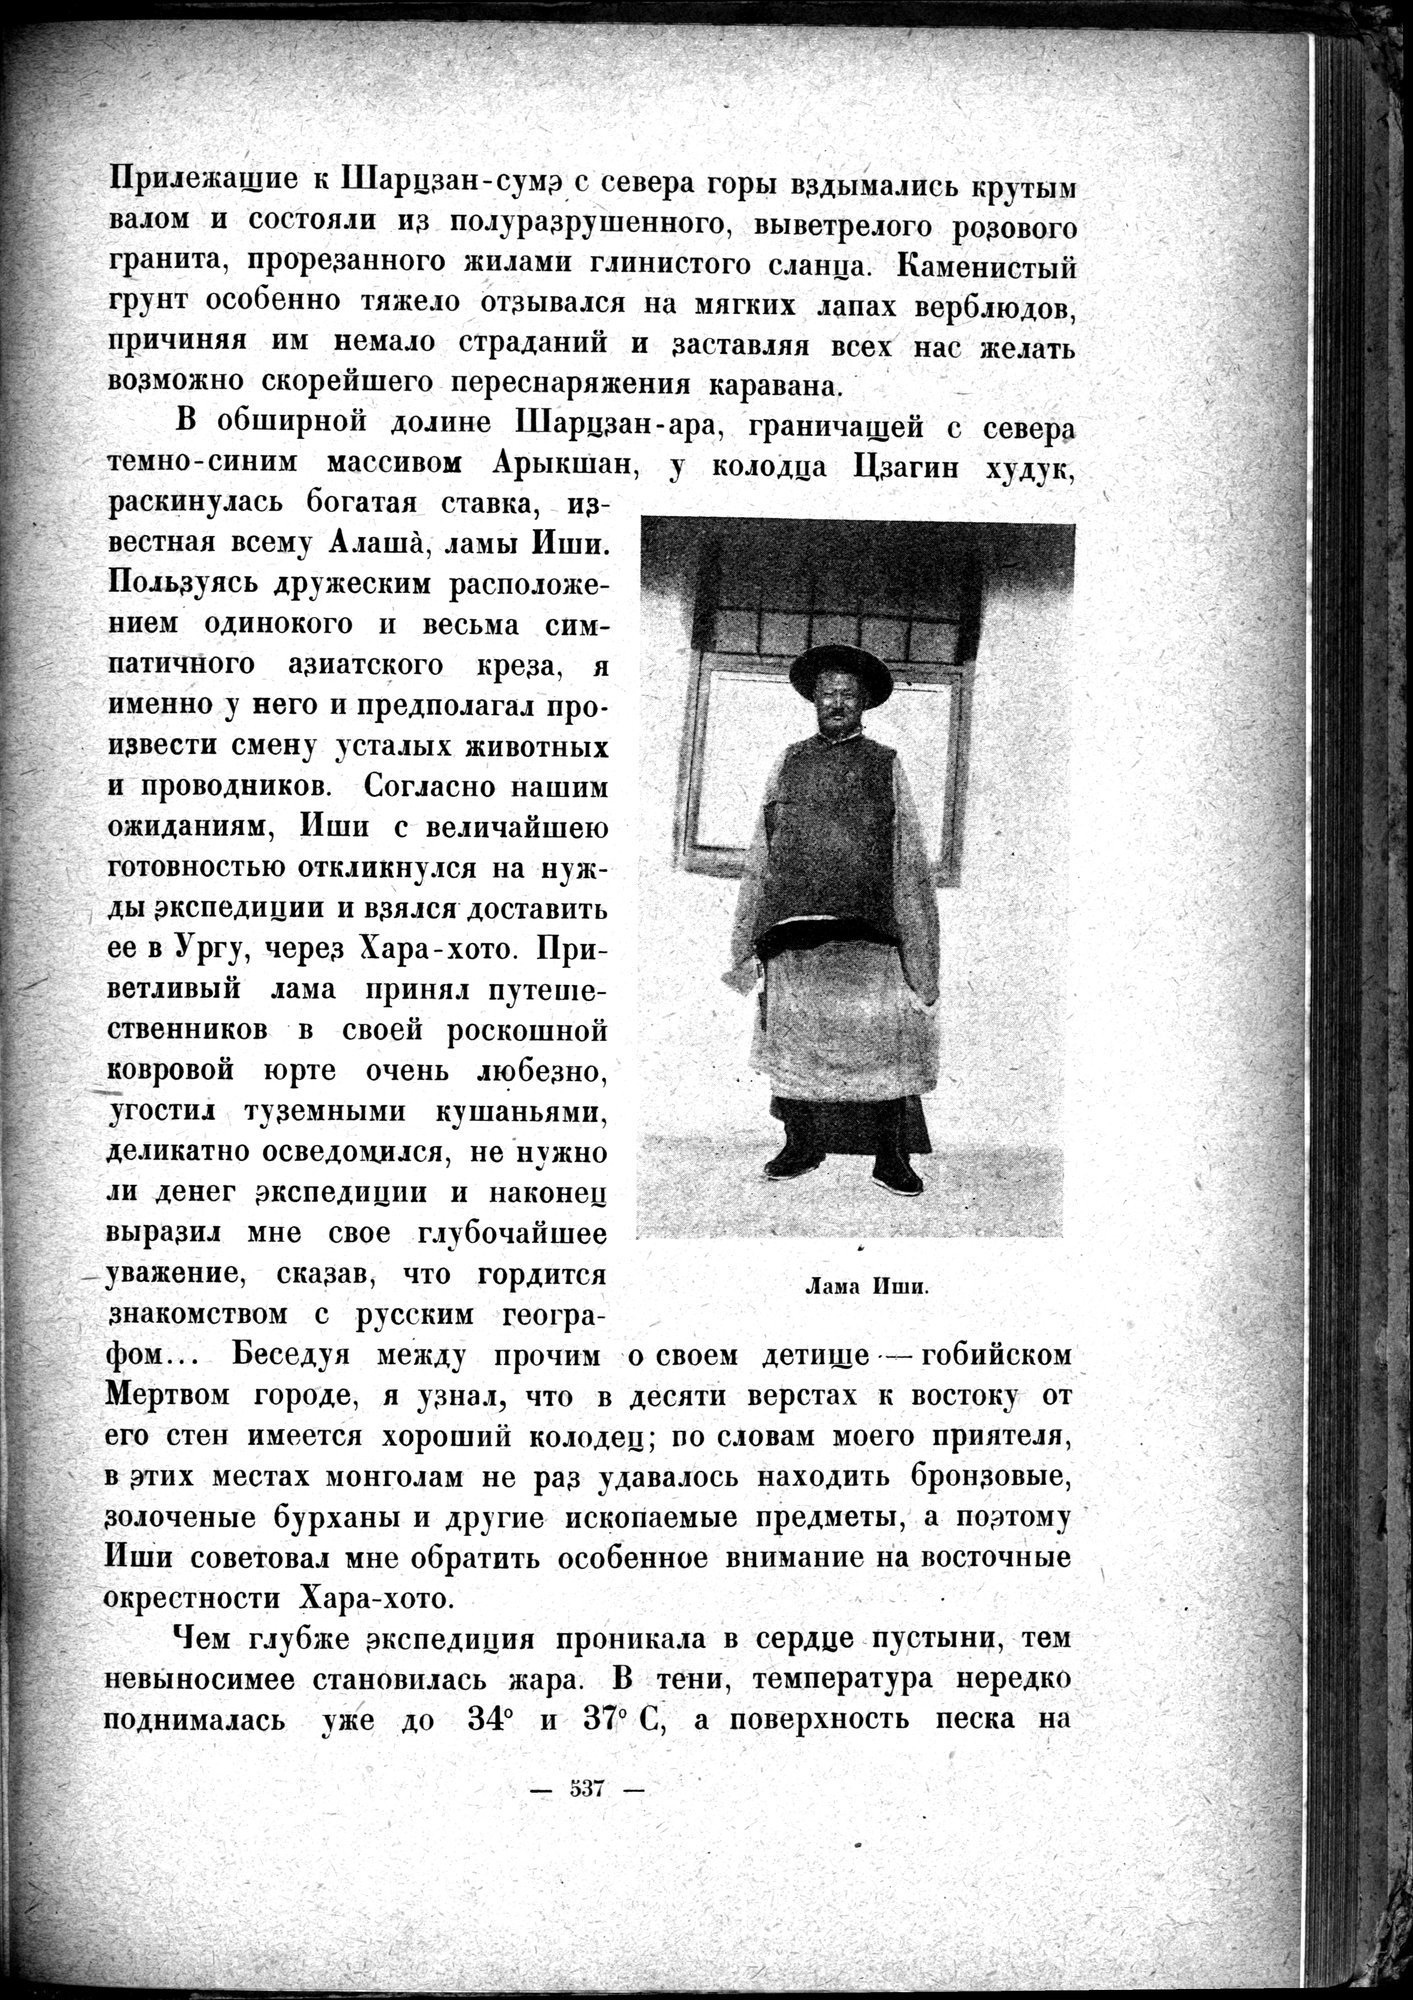 Mongoliya i Amdo i mertby gorod Khara-Khoto : vol.1 / Page 621 (Grayscale High Resolution Image)